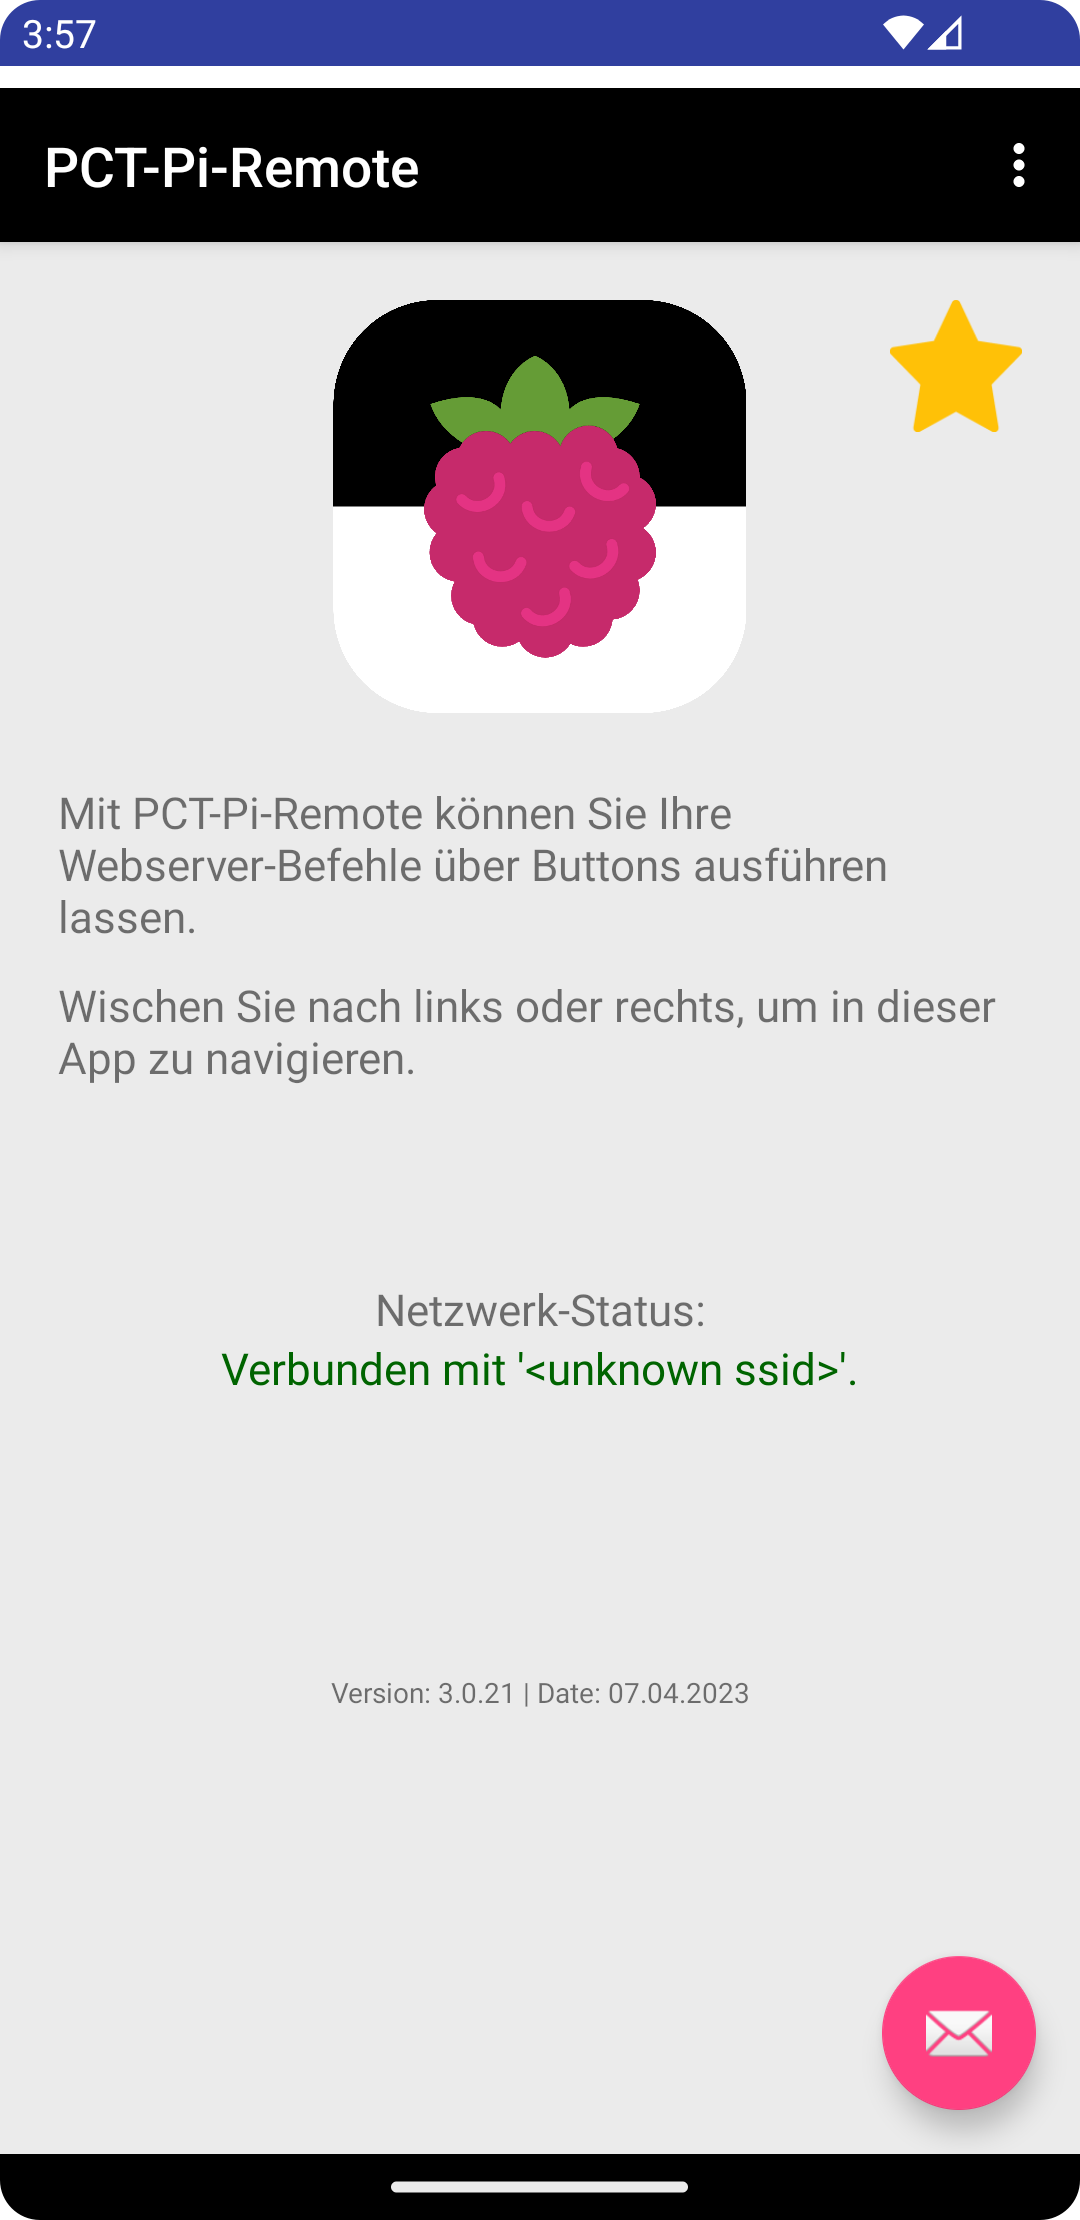 PCT-Pi-Remote | App für Android, Smart Home - Screenshot 1.